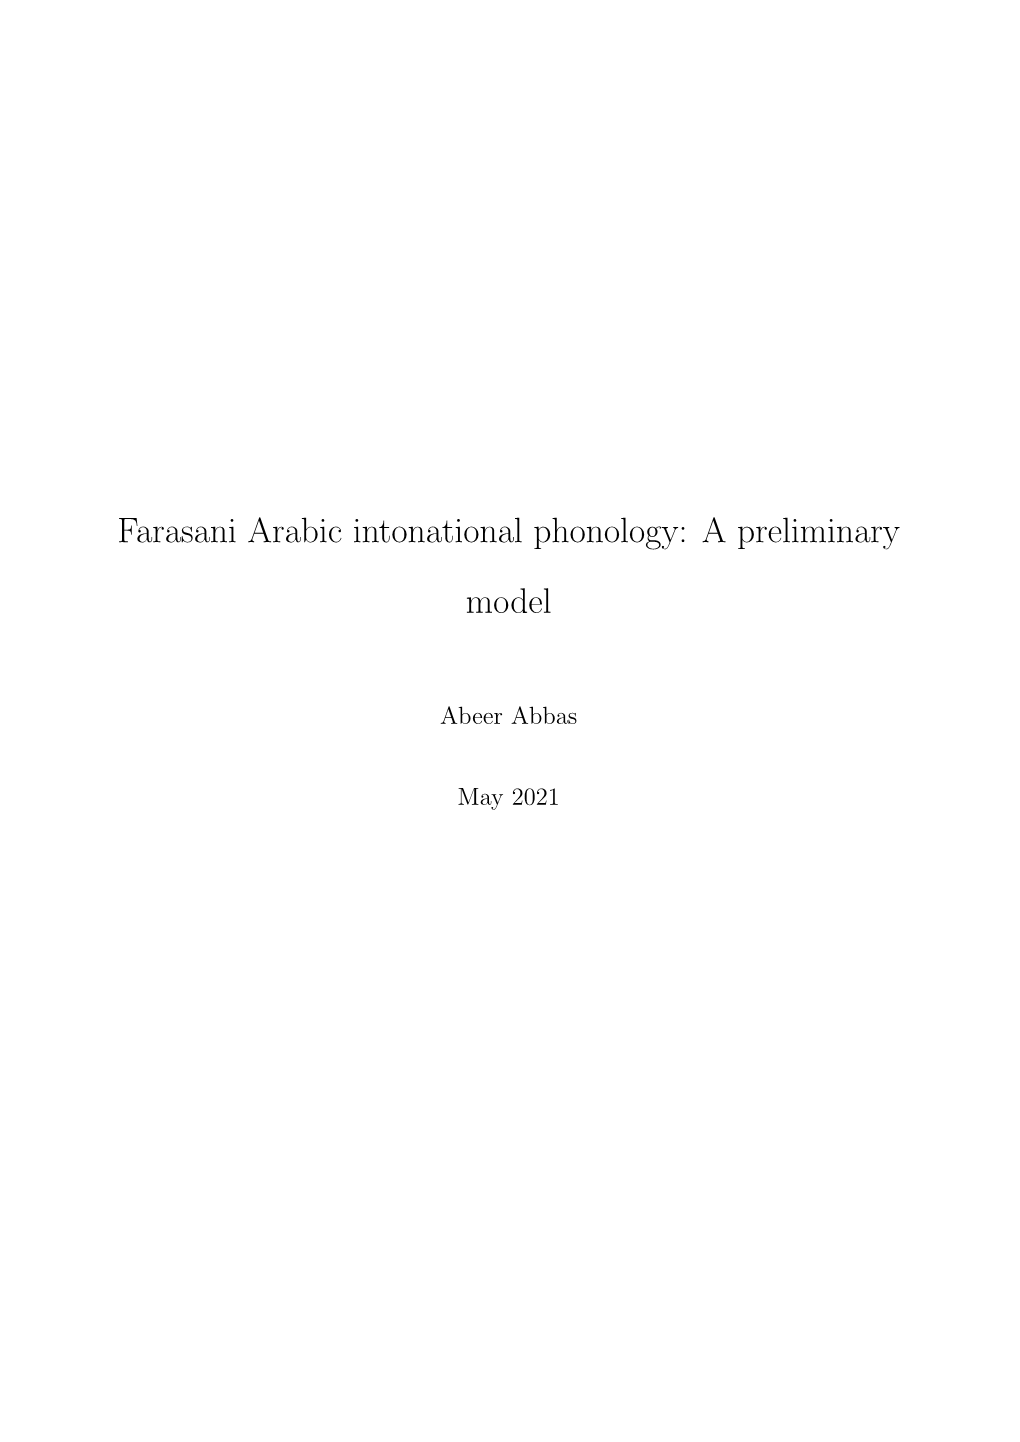 Farasani Arabic Intonational Phonology: a Preliminary Model